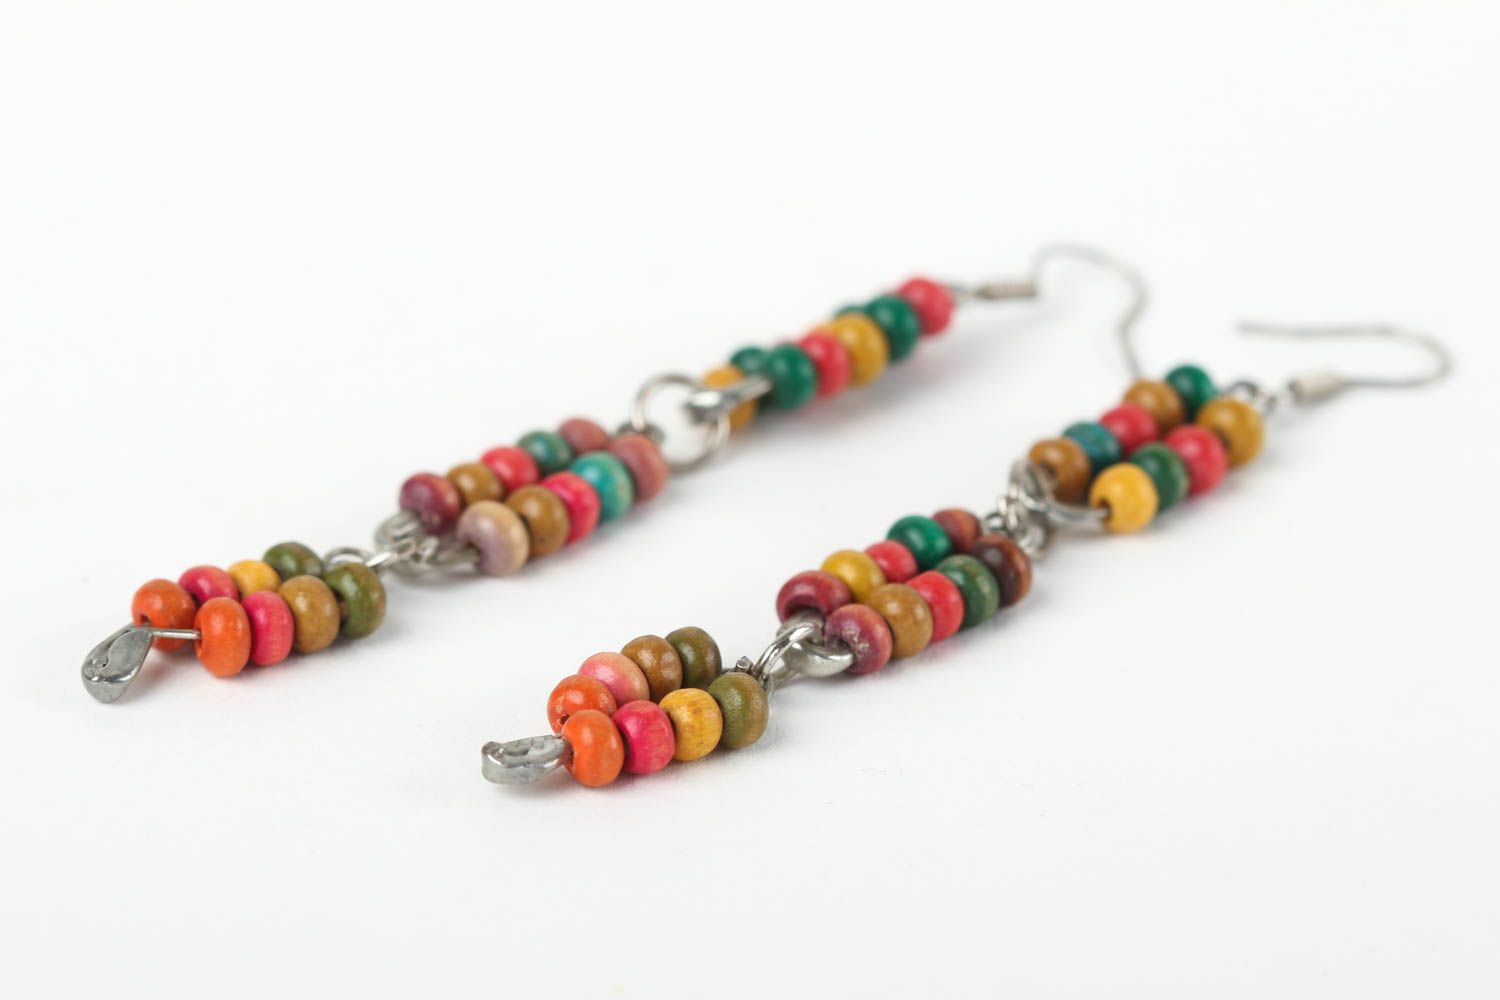 Handmade wooden earrings with charms colorful earrings long earrings gift photo 3